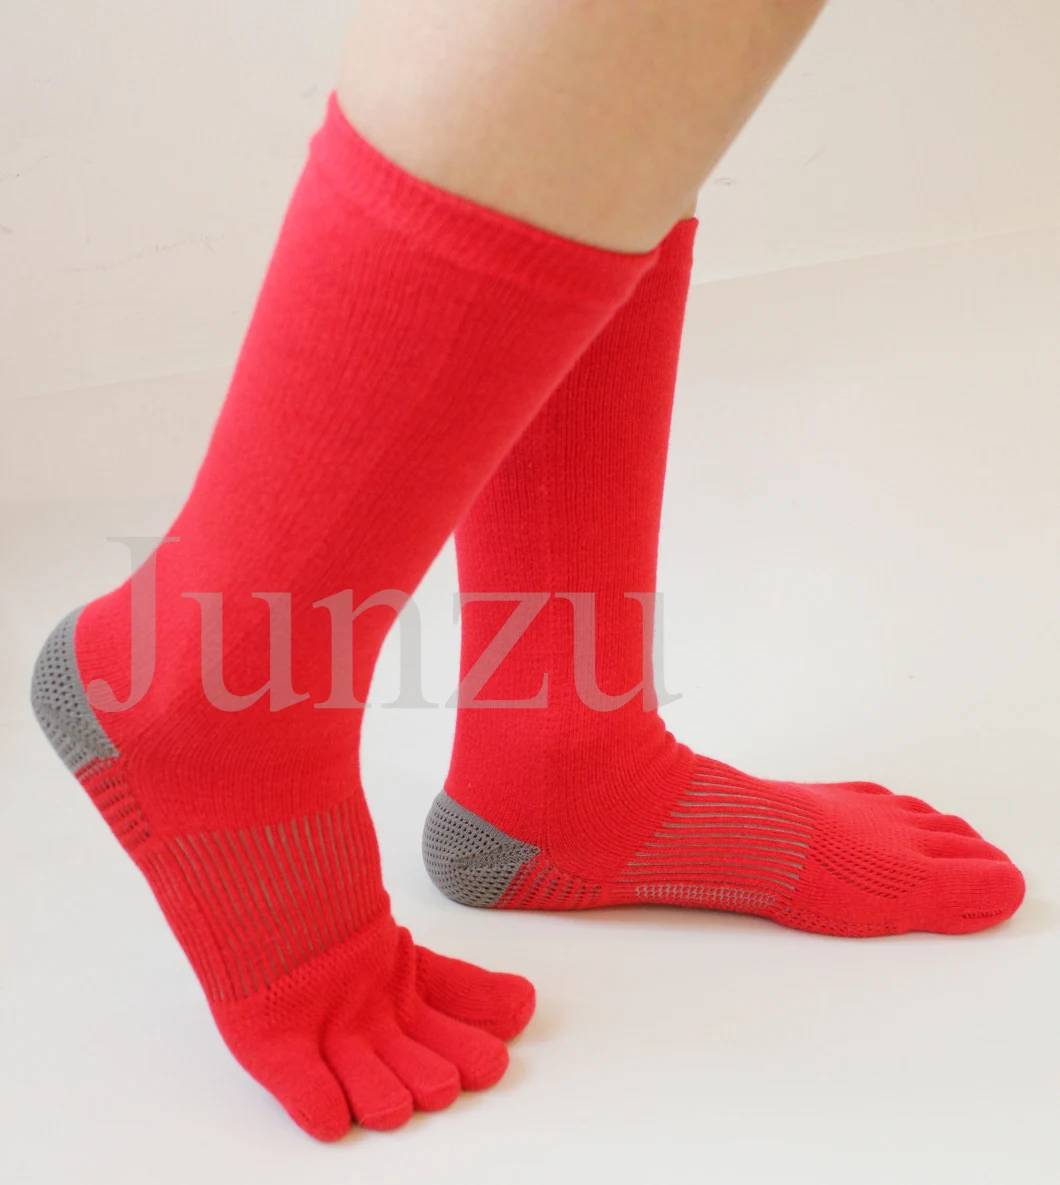 Toe Socks Athletic Socks Yoga Socks Five Fingers Socks